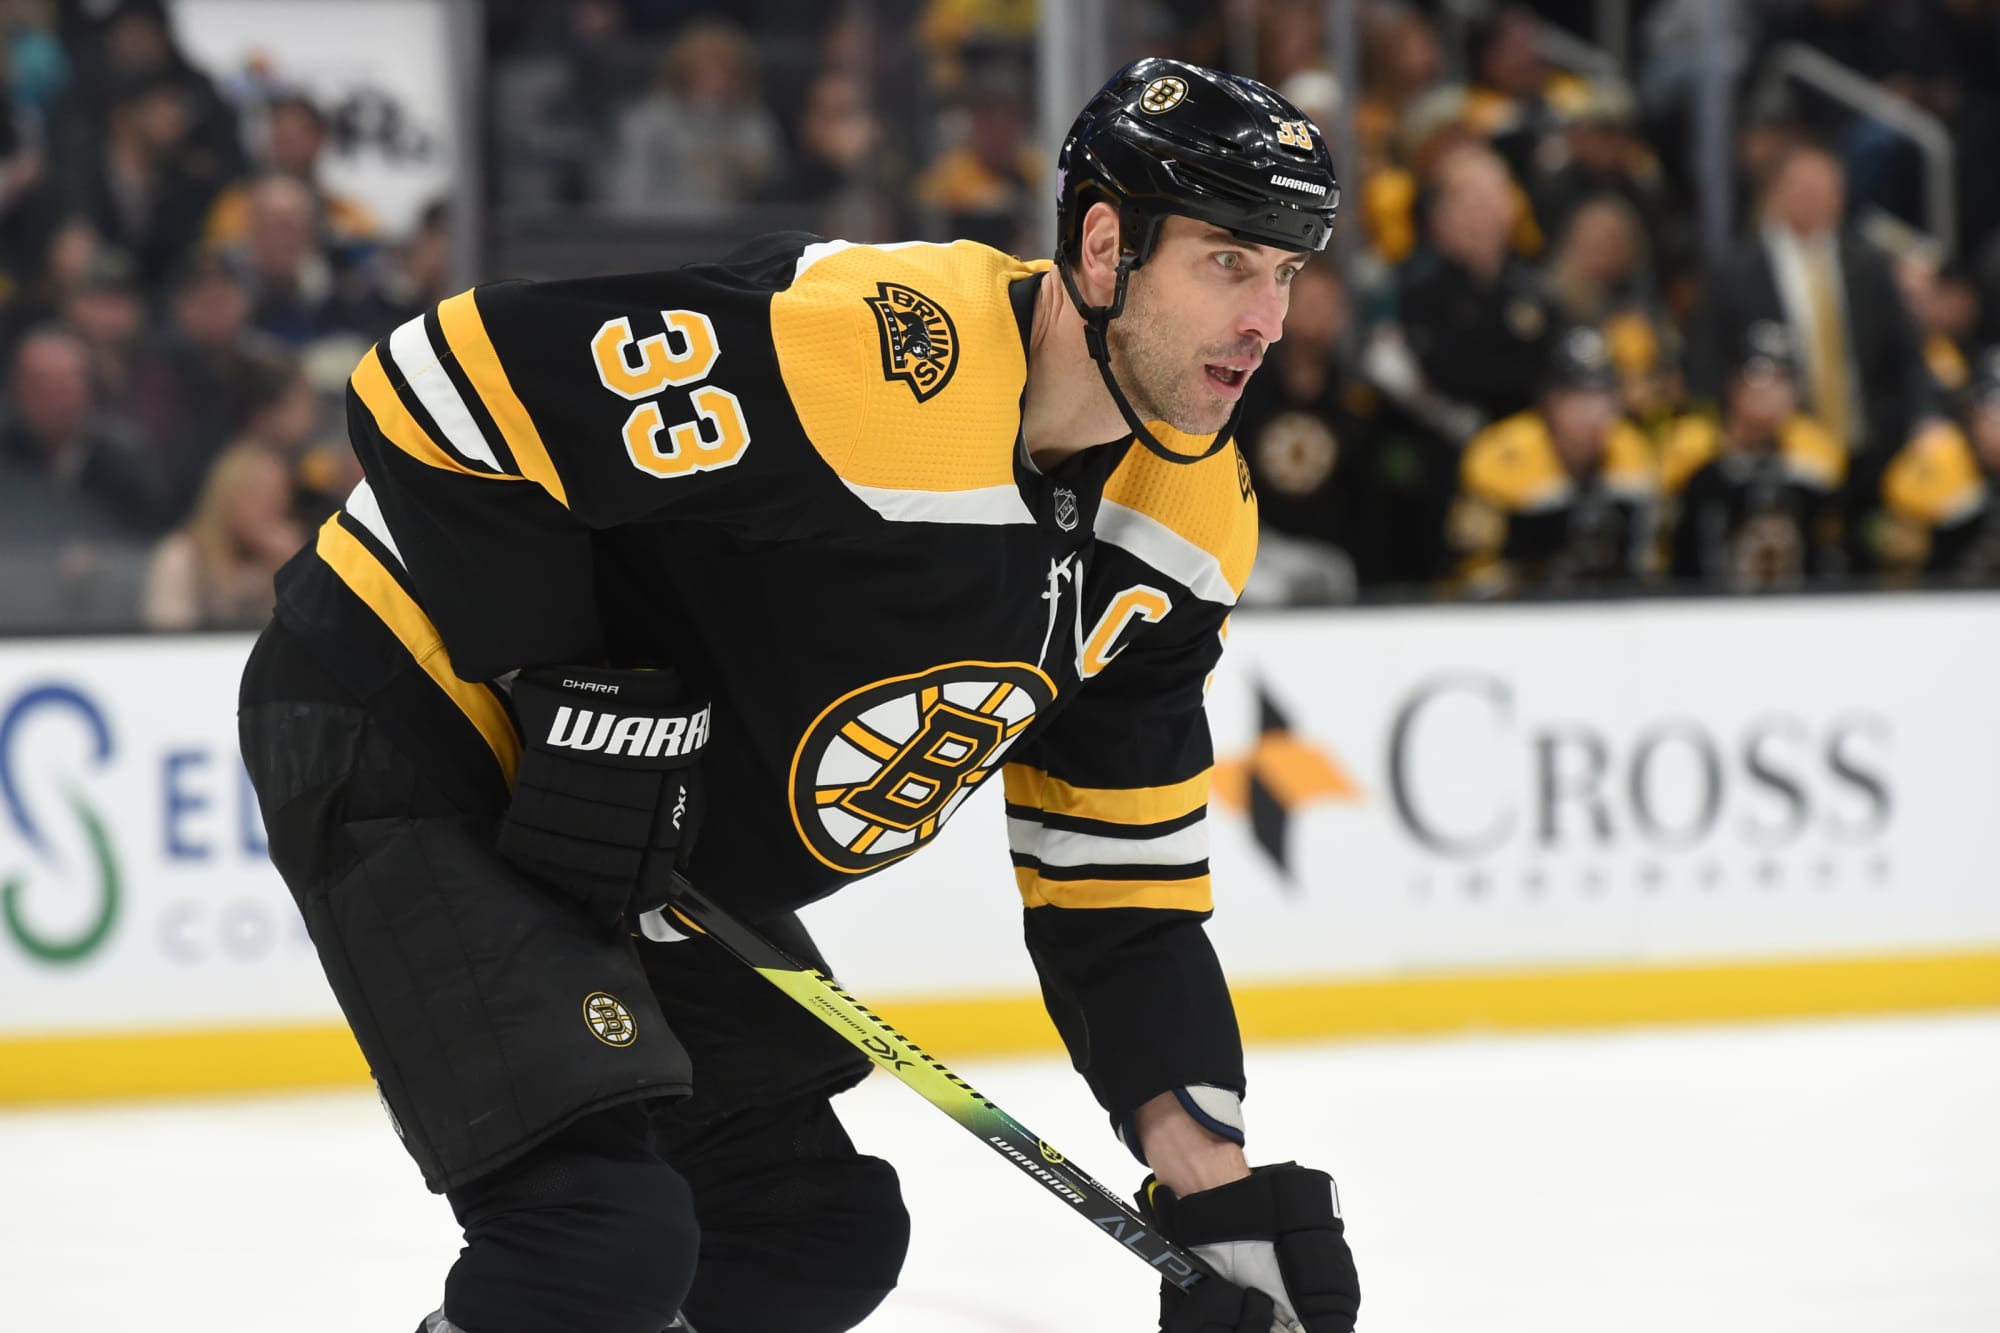 Bruins Captain Chara Defends Rask, Calls Him 'The Boston Wall